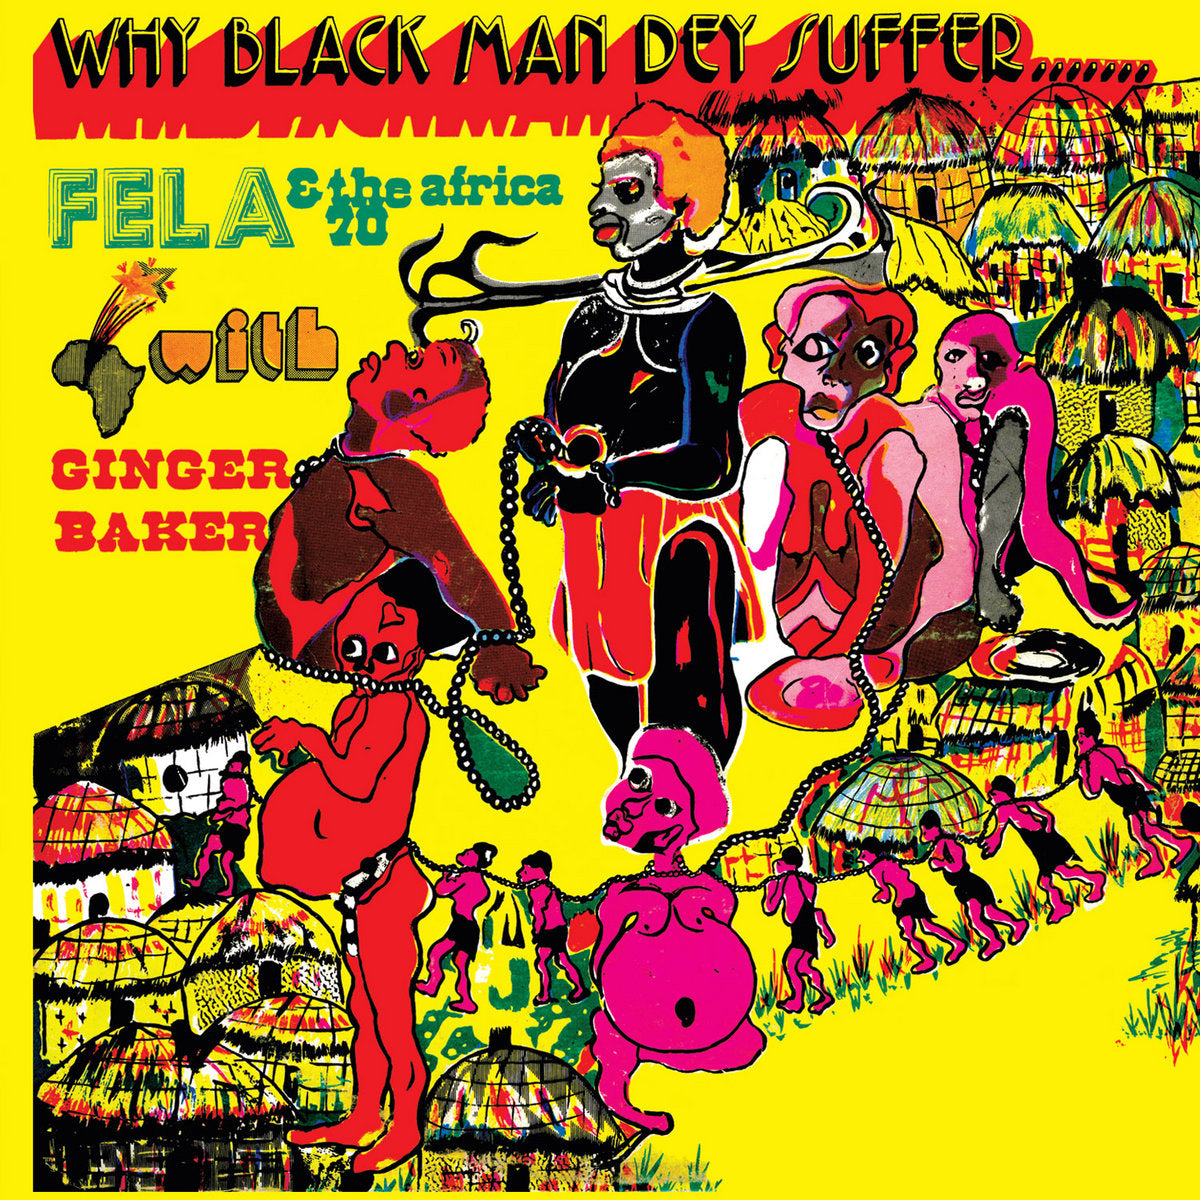 Kuti, Fela: Why Black Man Dey Suffer (Coloured Vinyl LP)